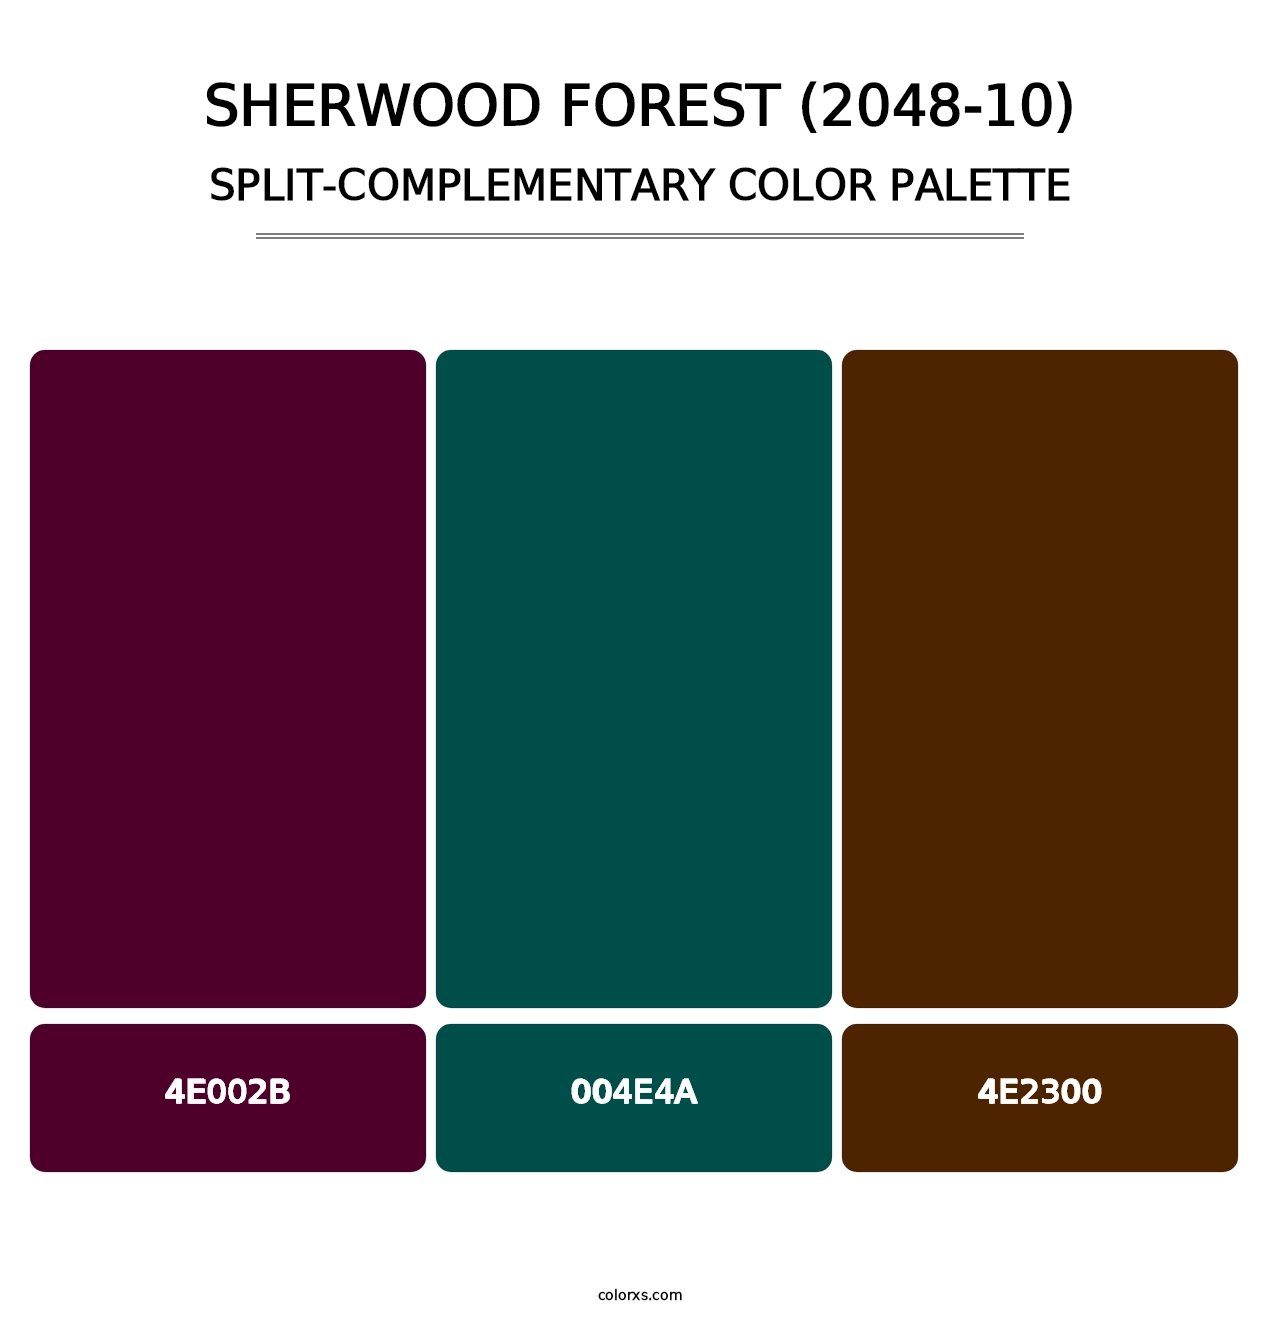 Sherwood Forest (2048-10) - Split-Complementary Color Palette